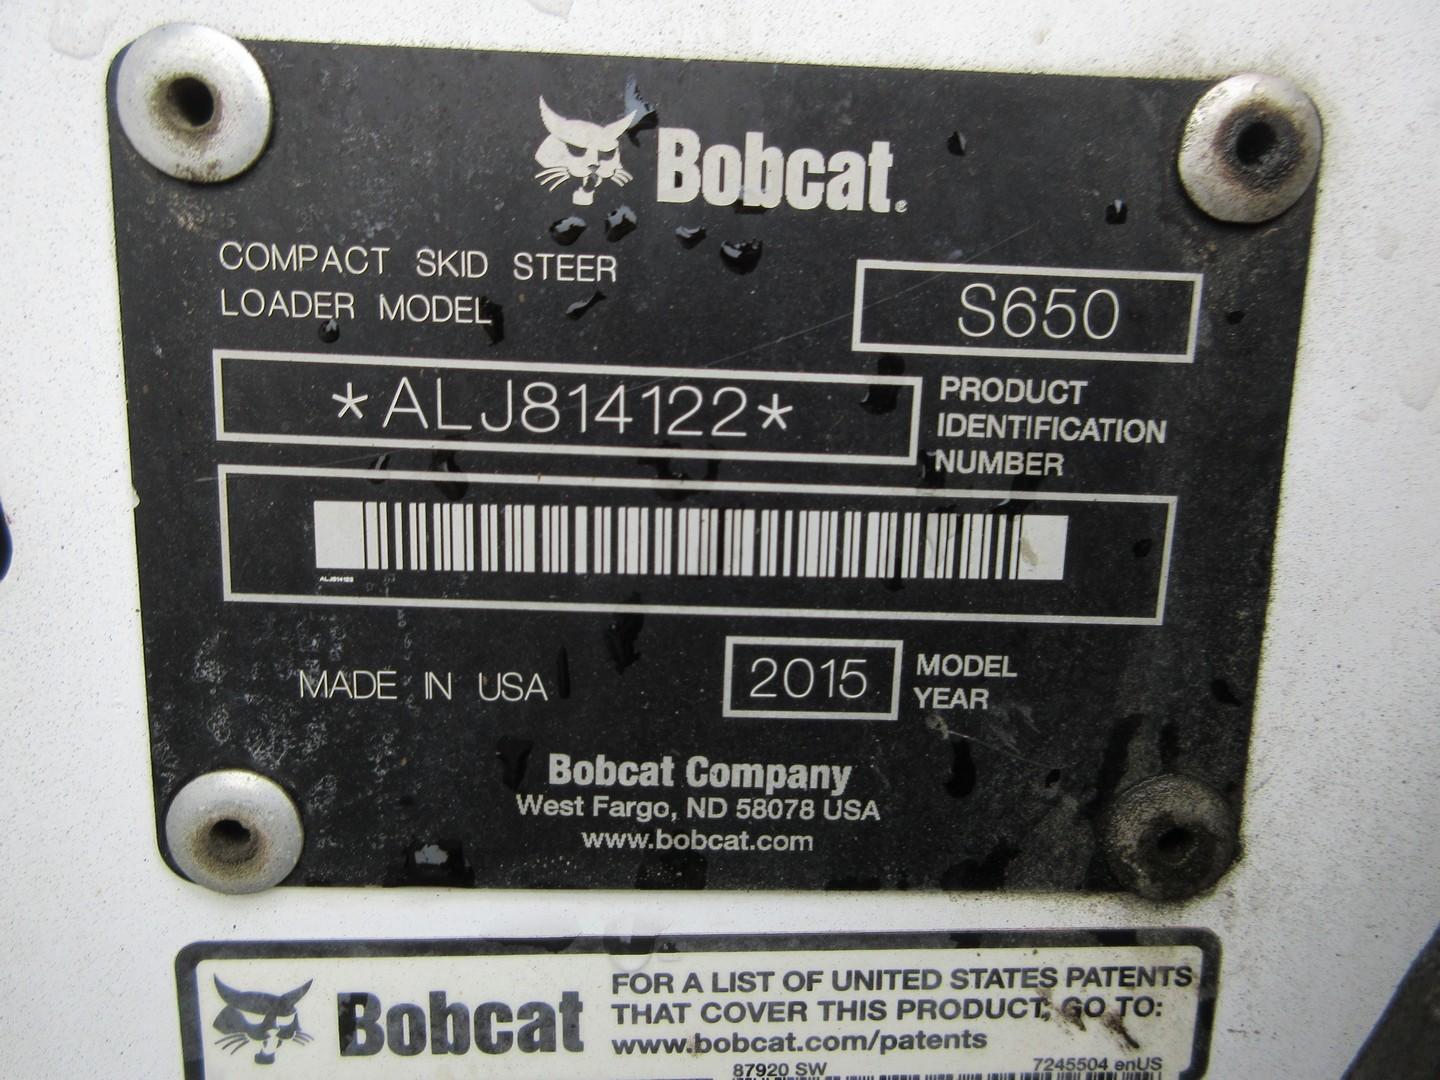 2015 Bobcat S650 Skid Steer